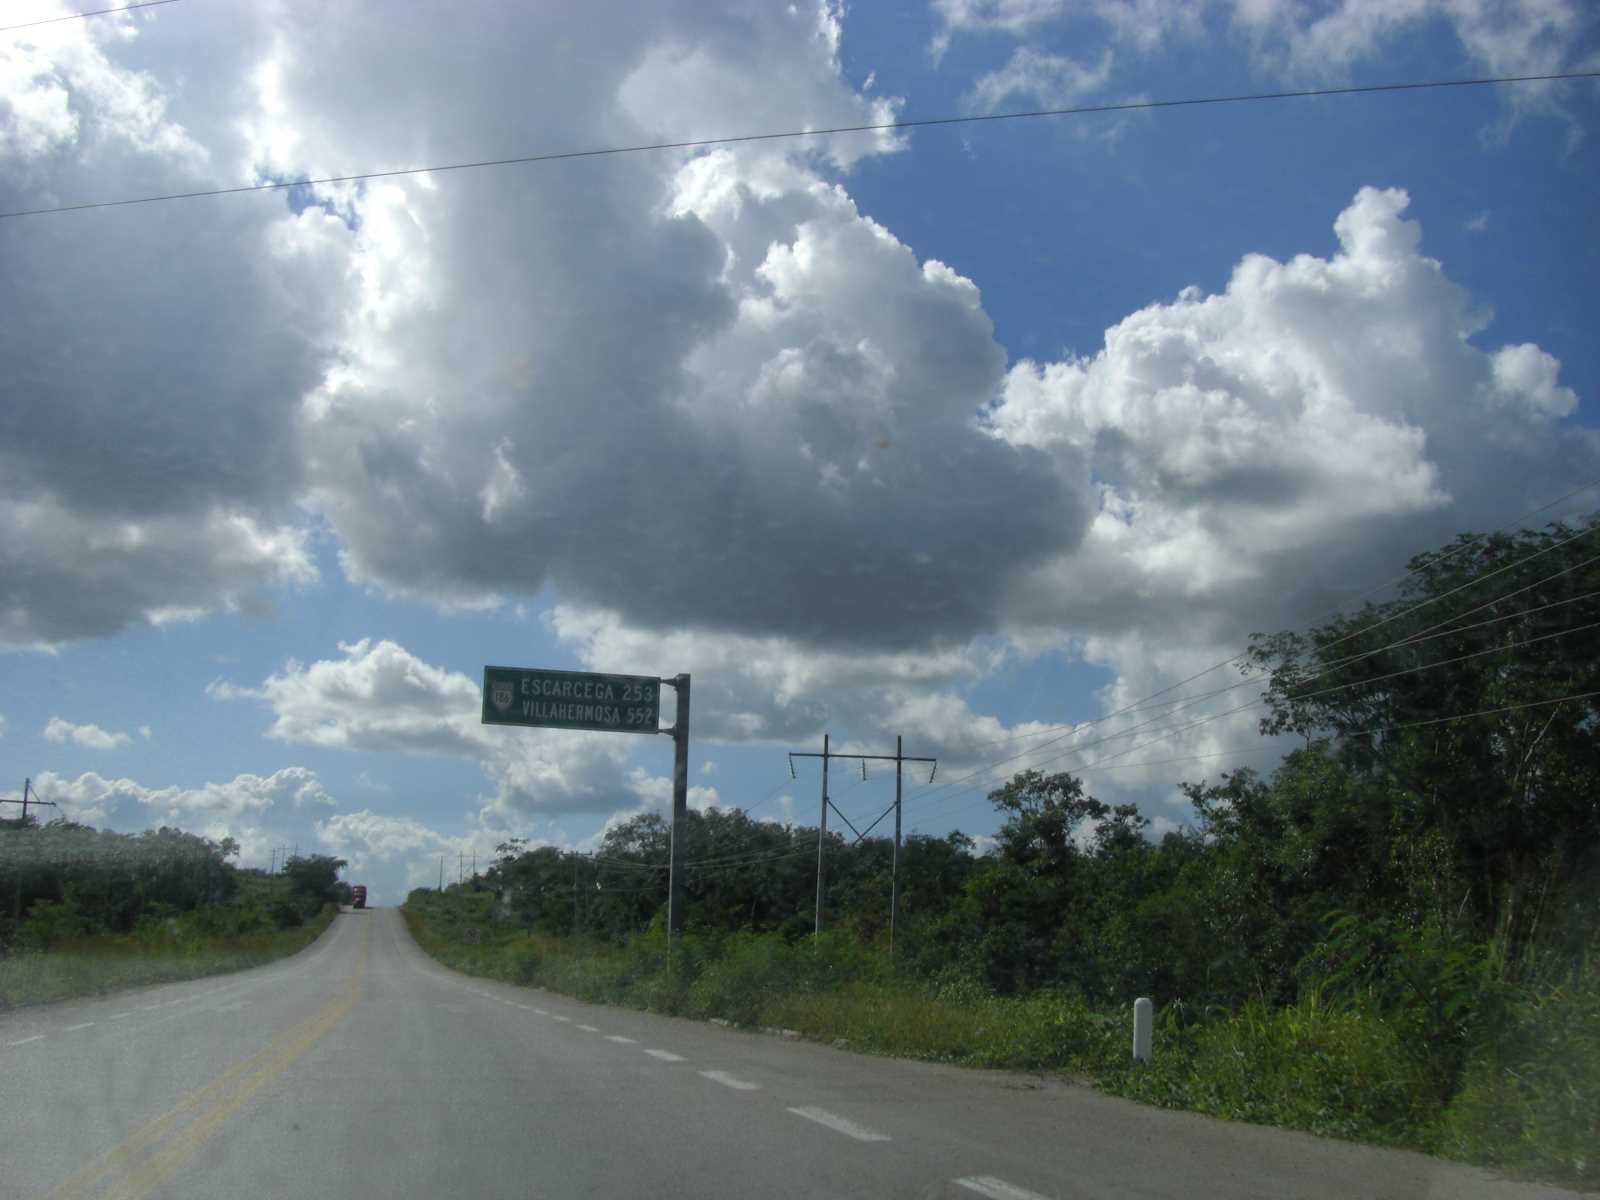 CIMG08
62 road sign 
